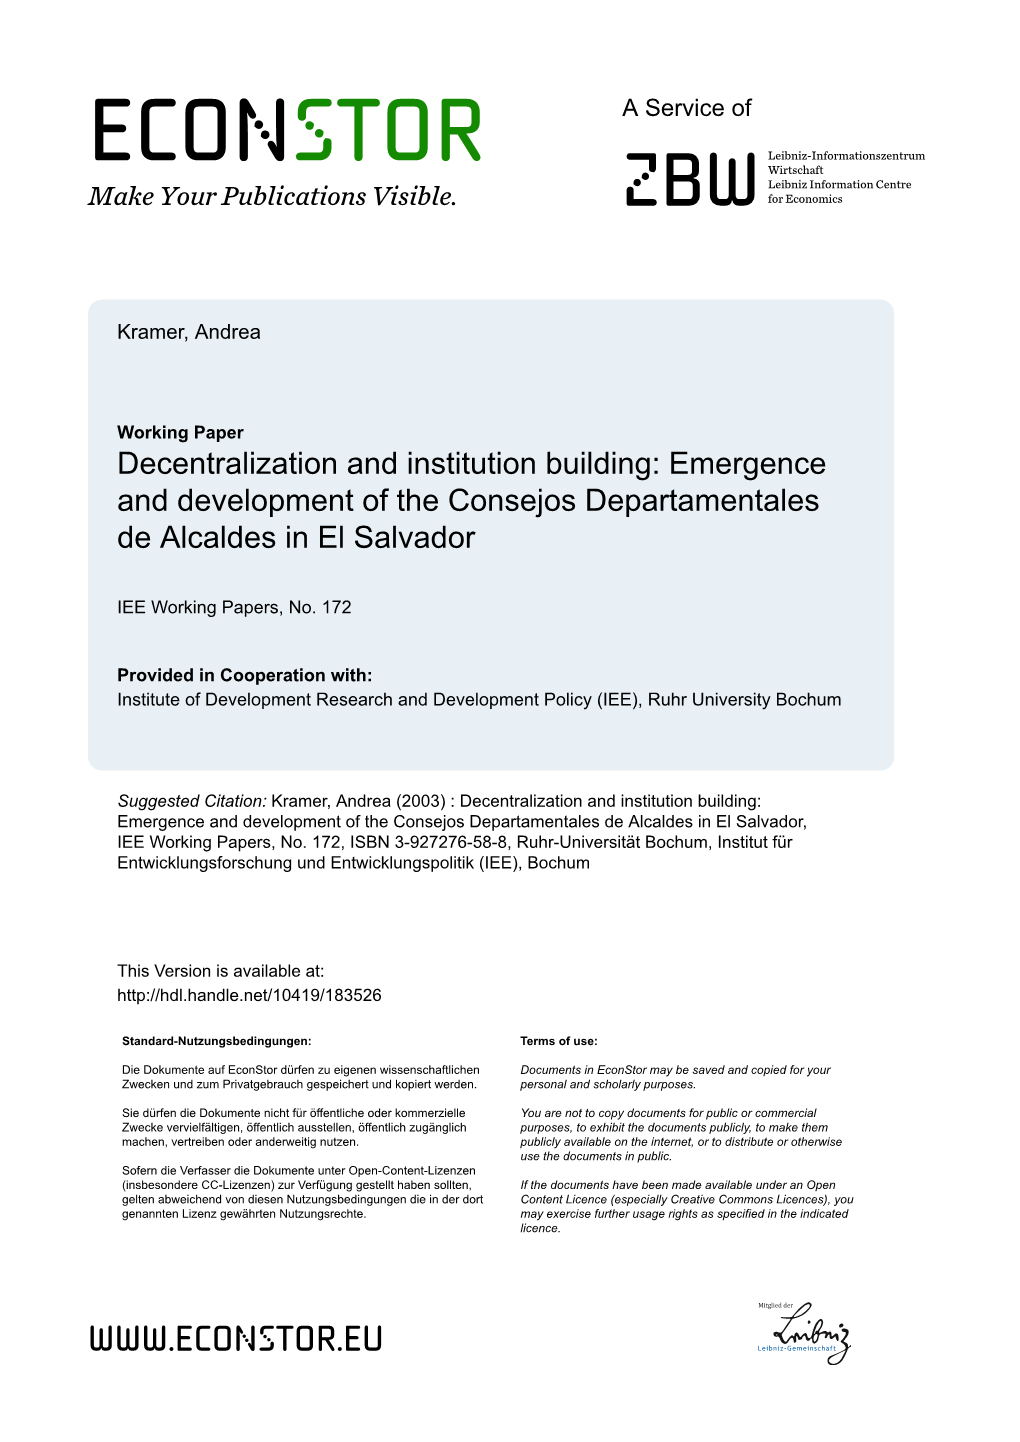 Decentralization and Institution Building: Emergence and Development of the Consejos Departamentales De Alcaldes in El Salvador